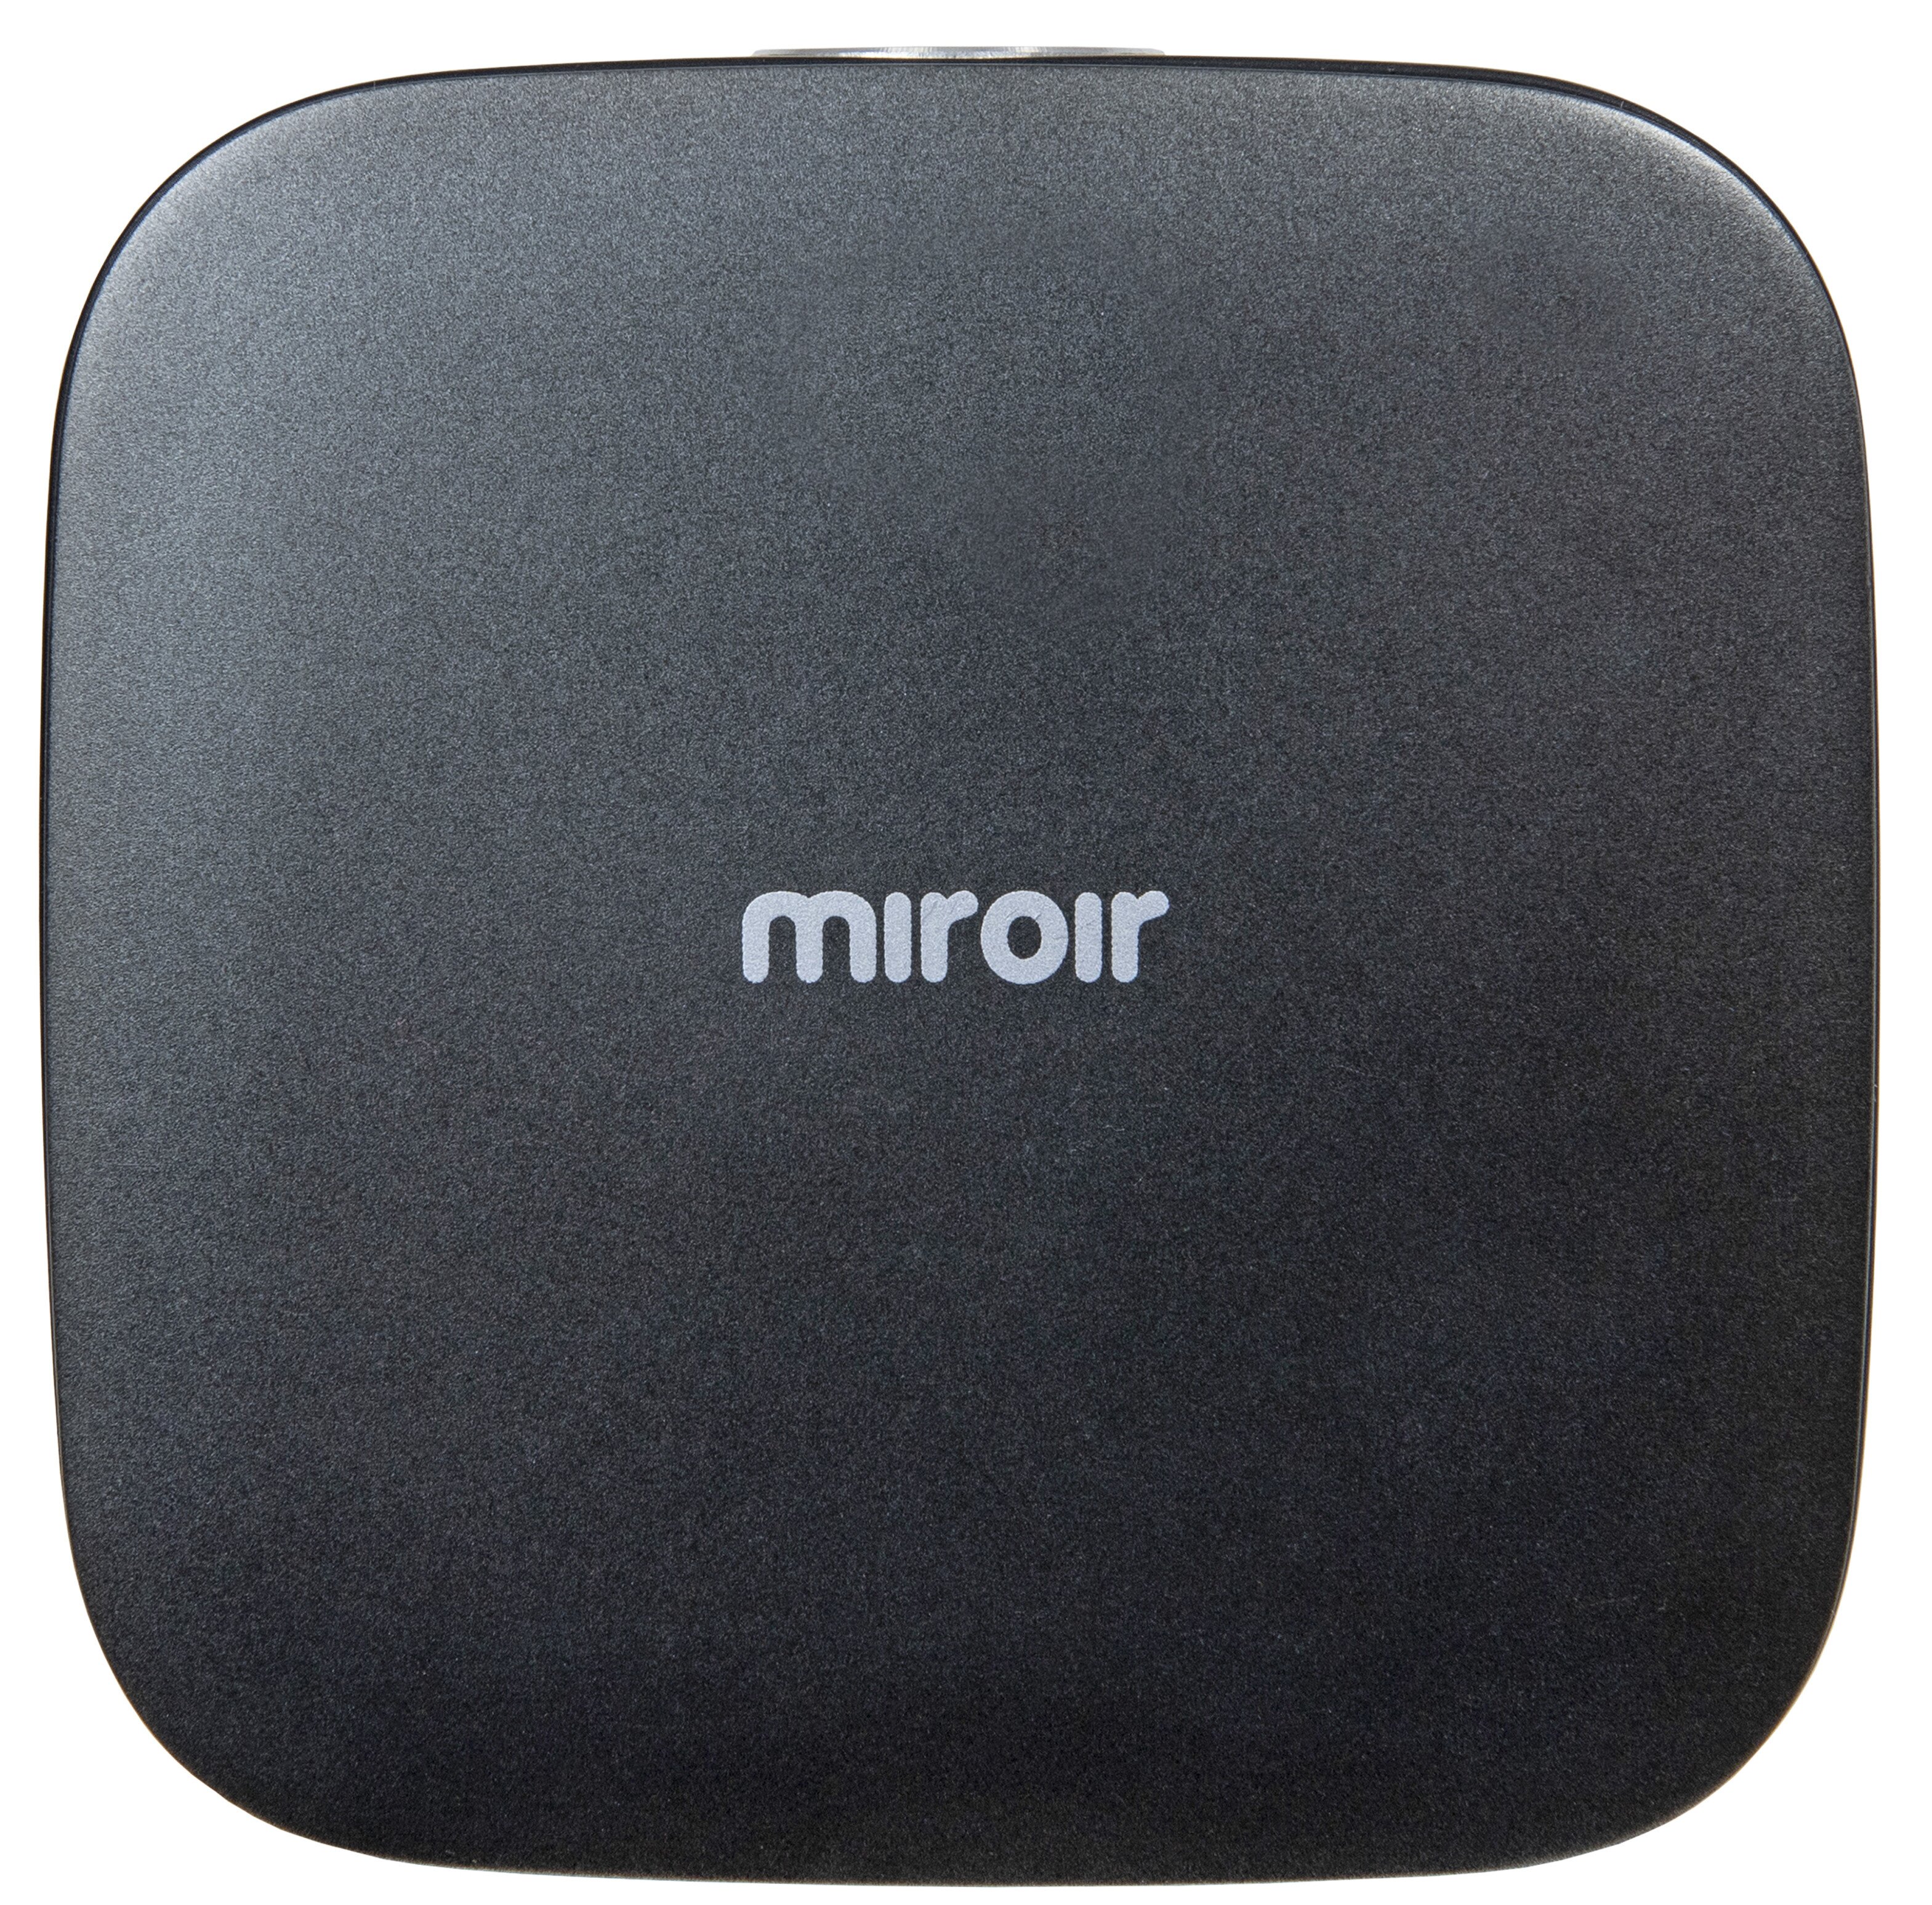 miroir micro pocket projector